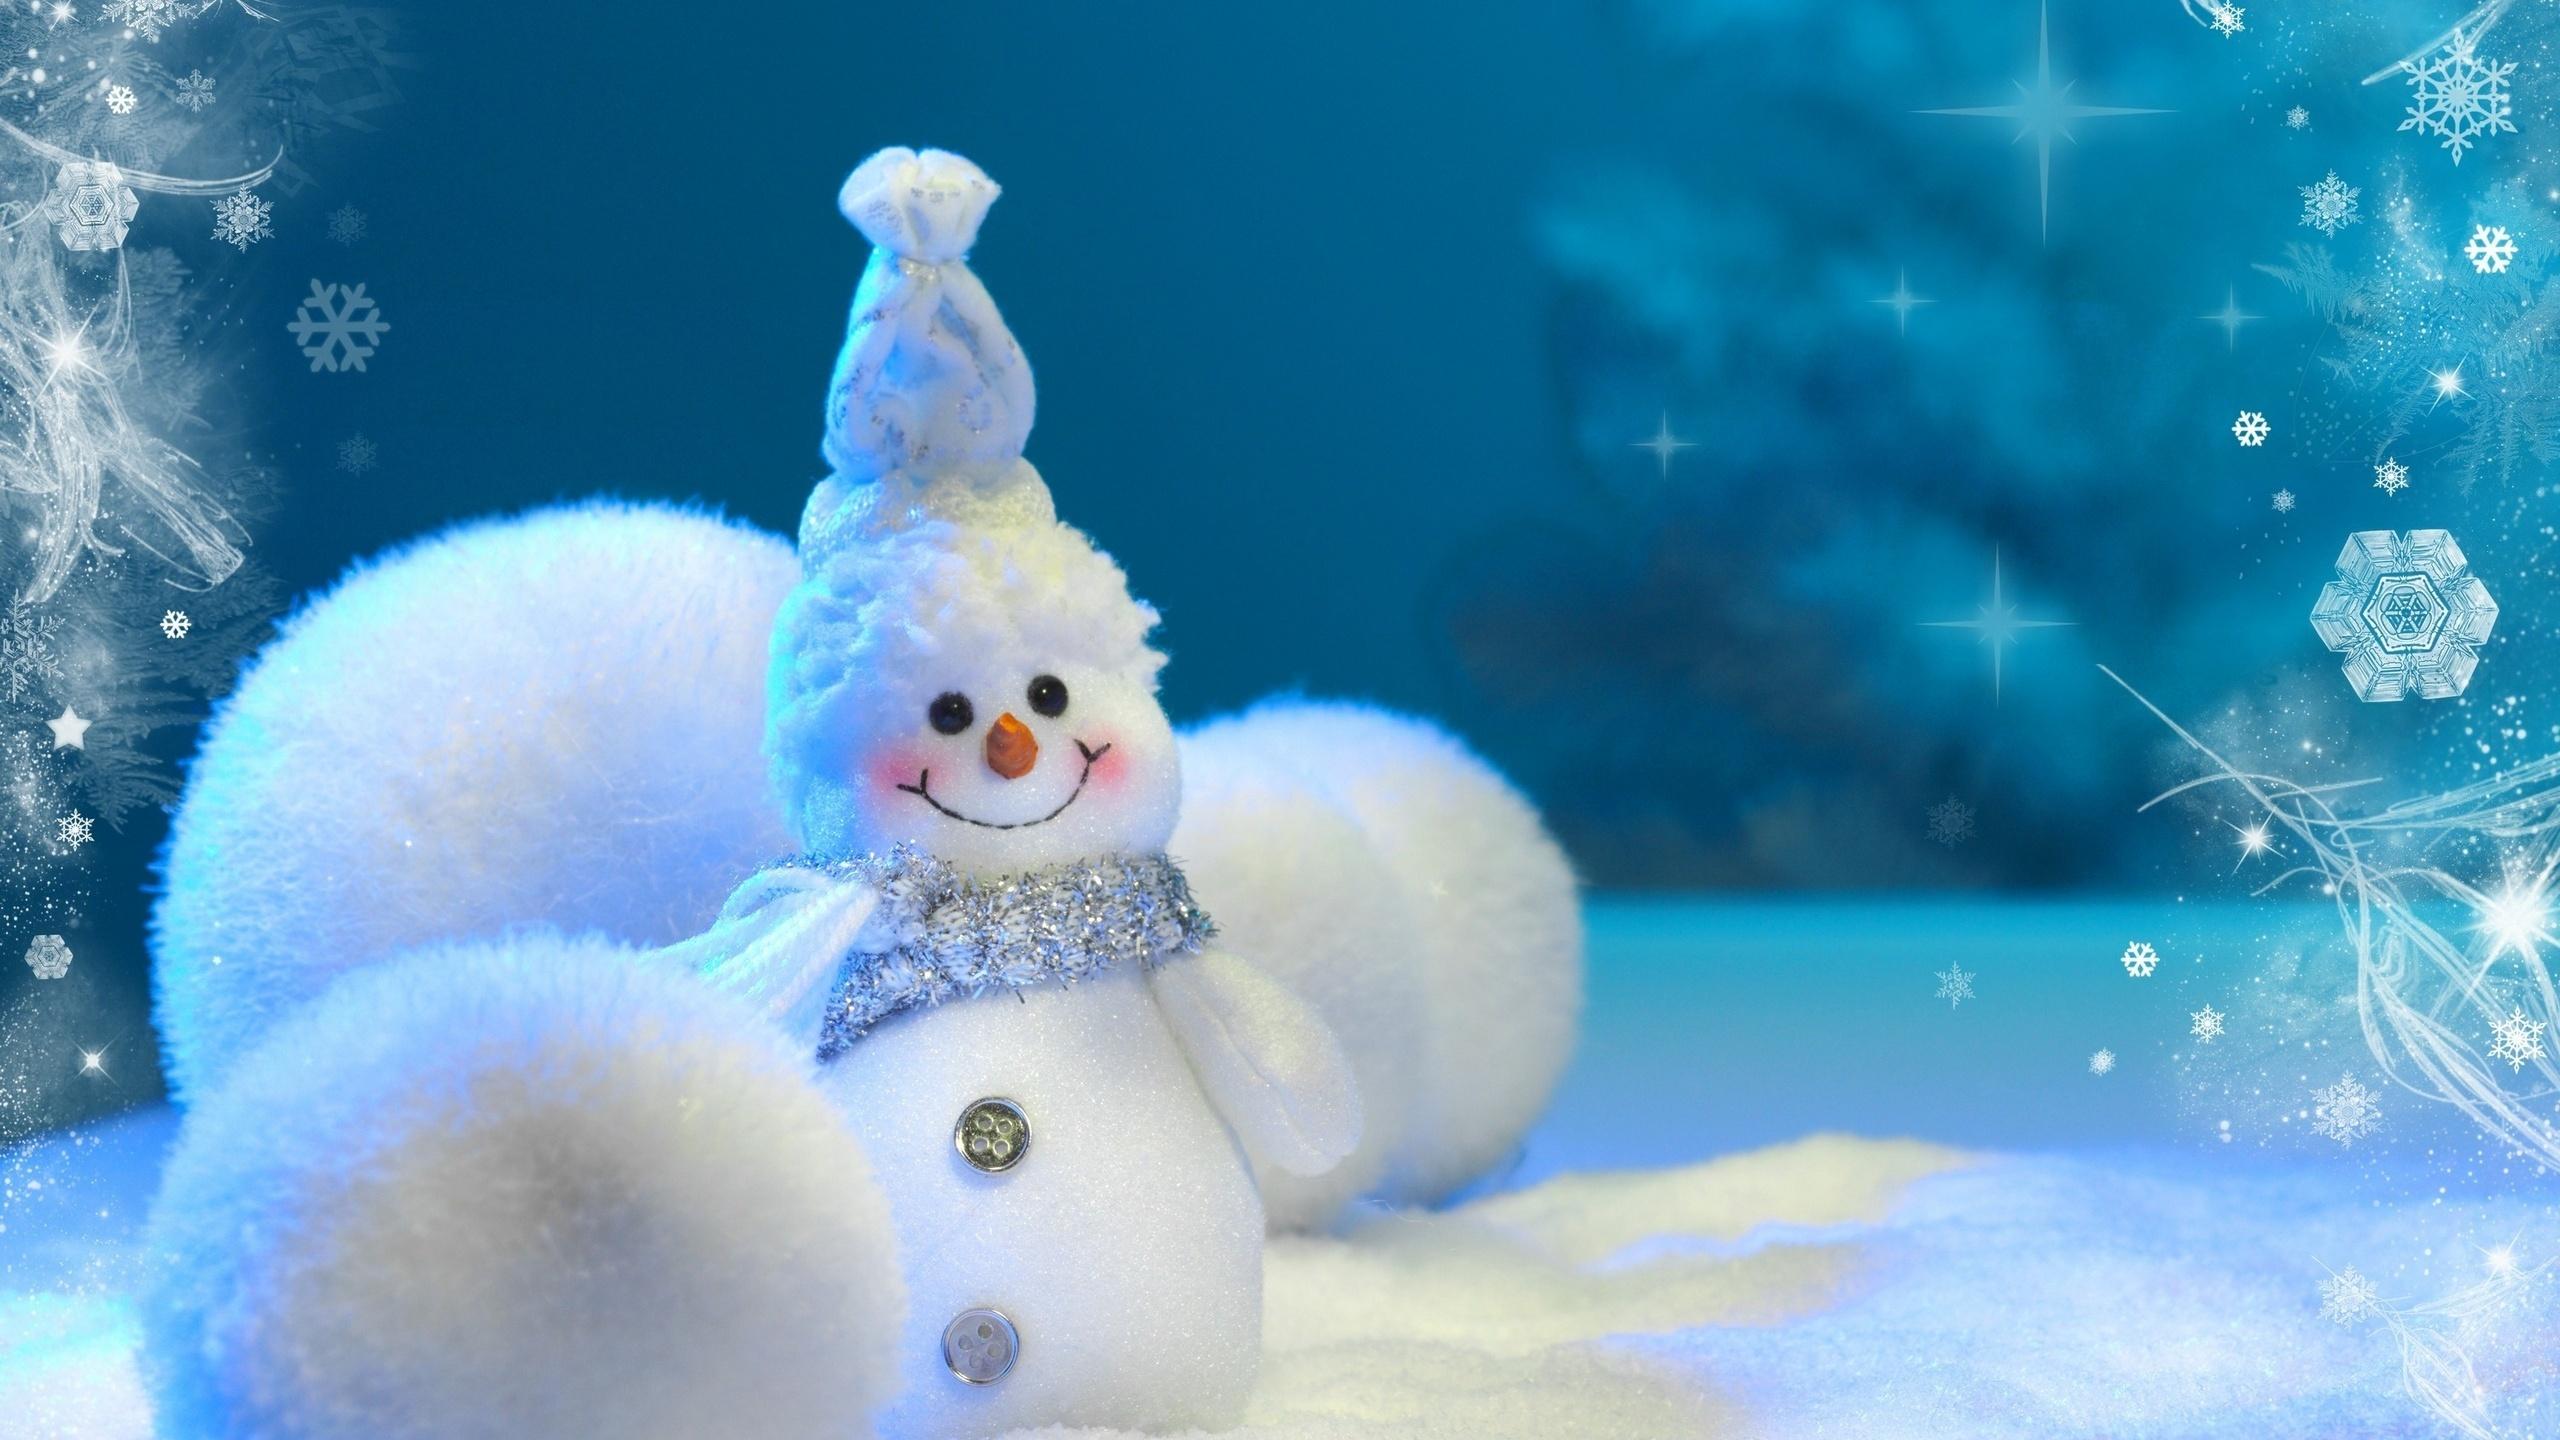 Free download Cute Blue Snowman Wallpaper 2560x1440 885833